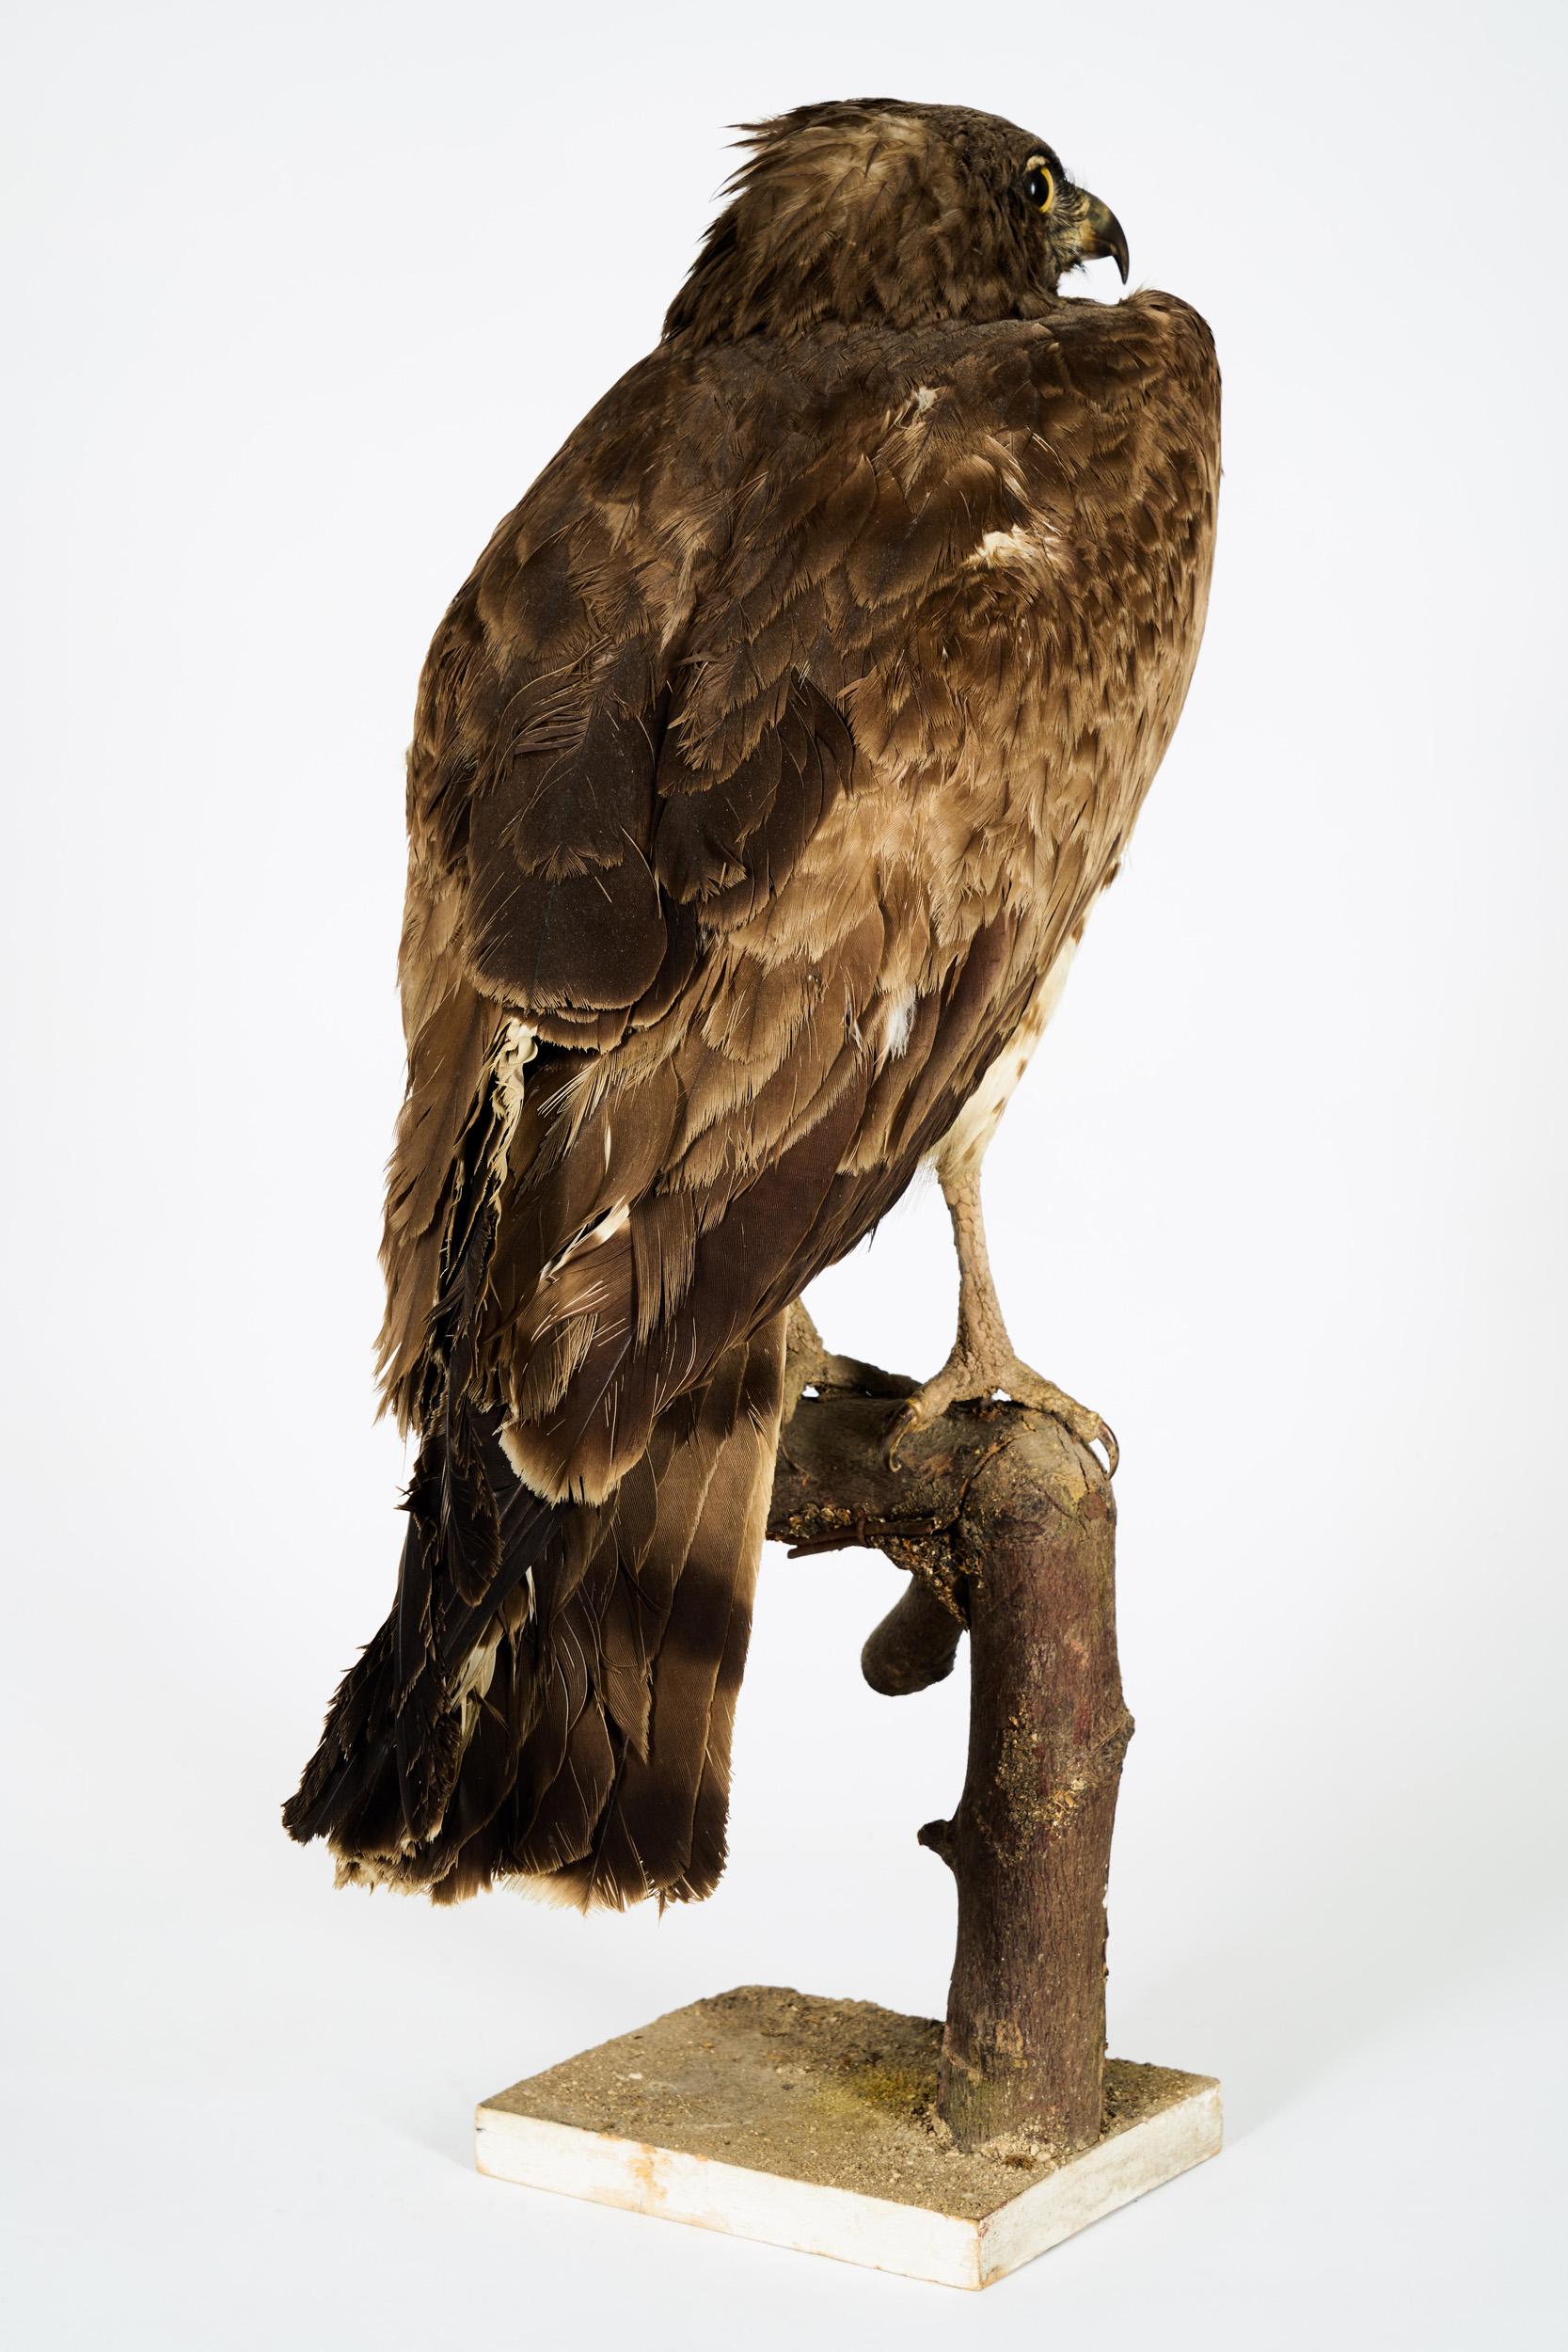 short-toed snake eagle